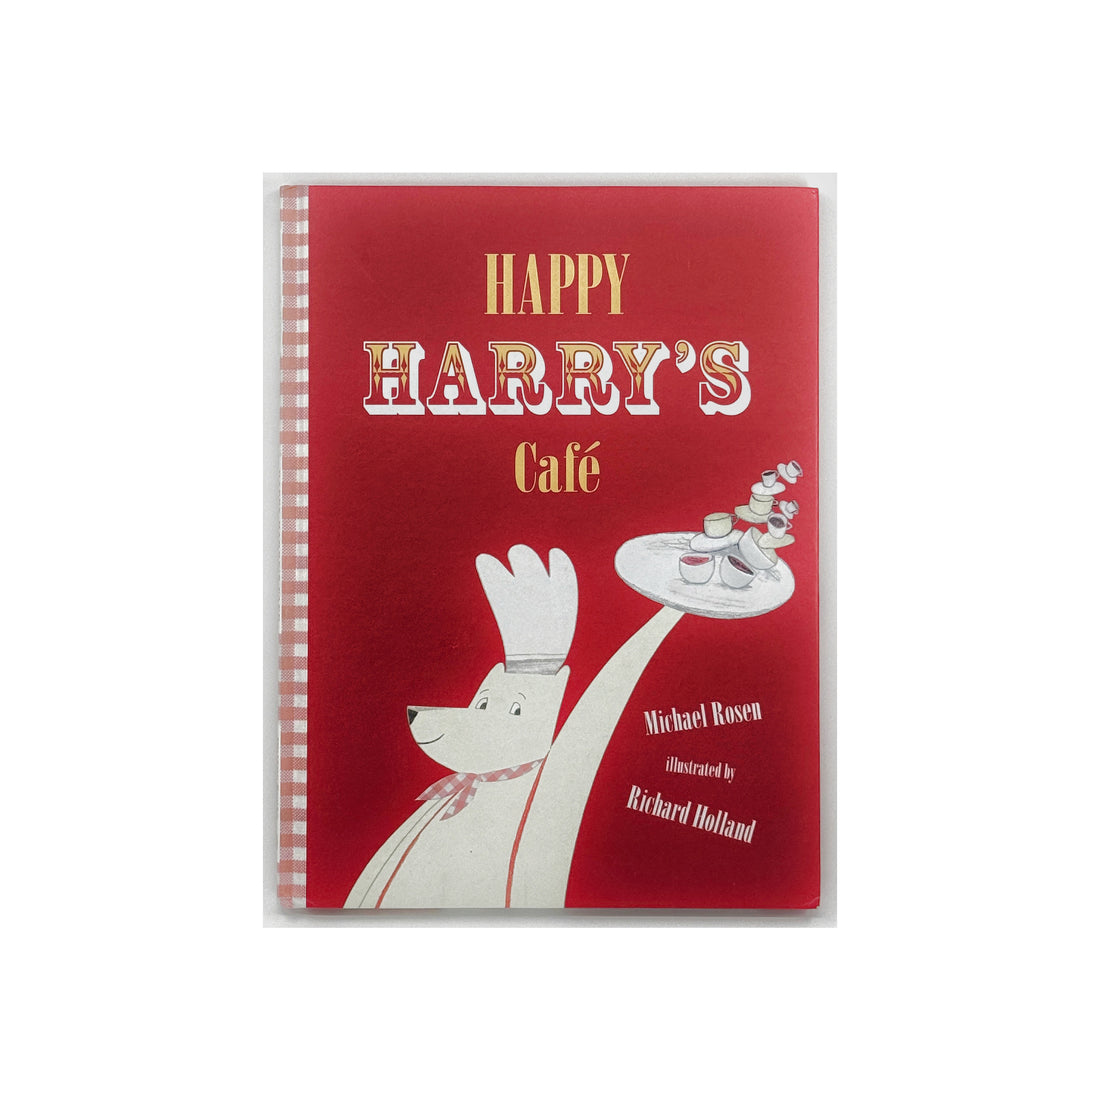 Happy Harry's Café by Michael Rosen